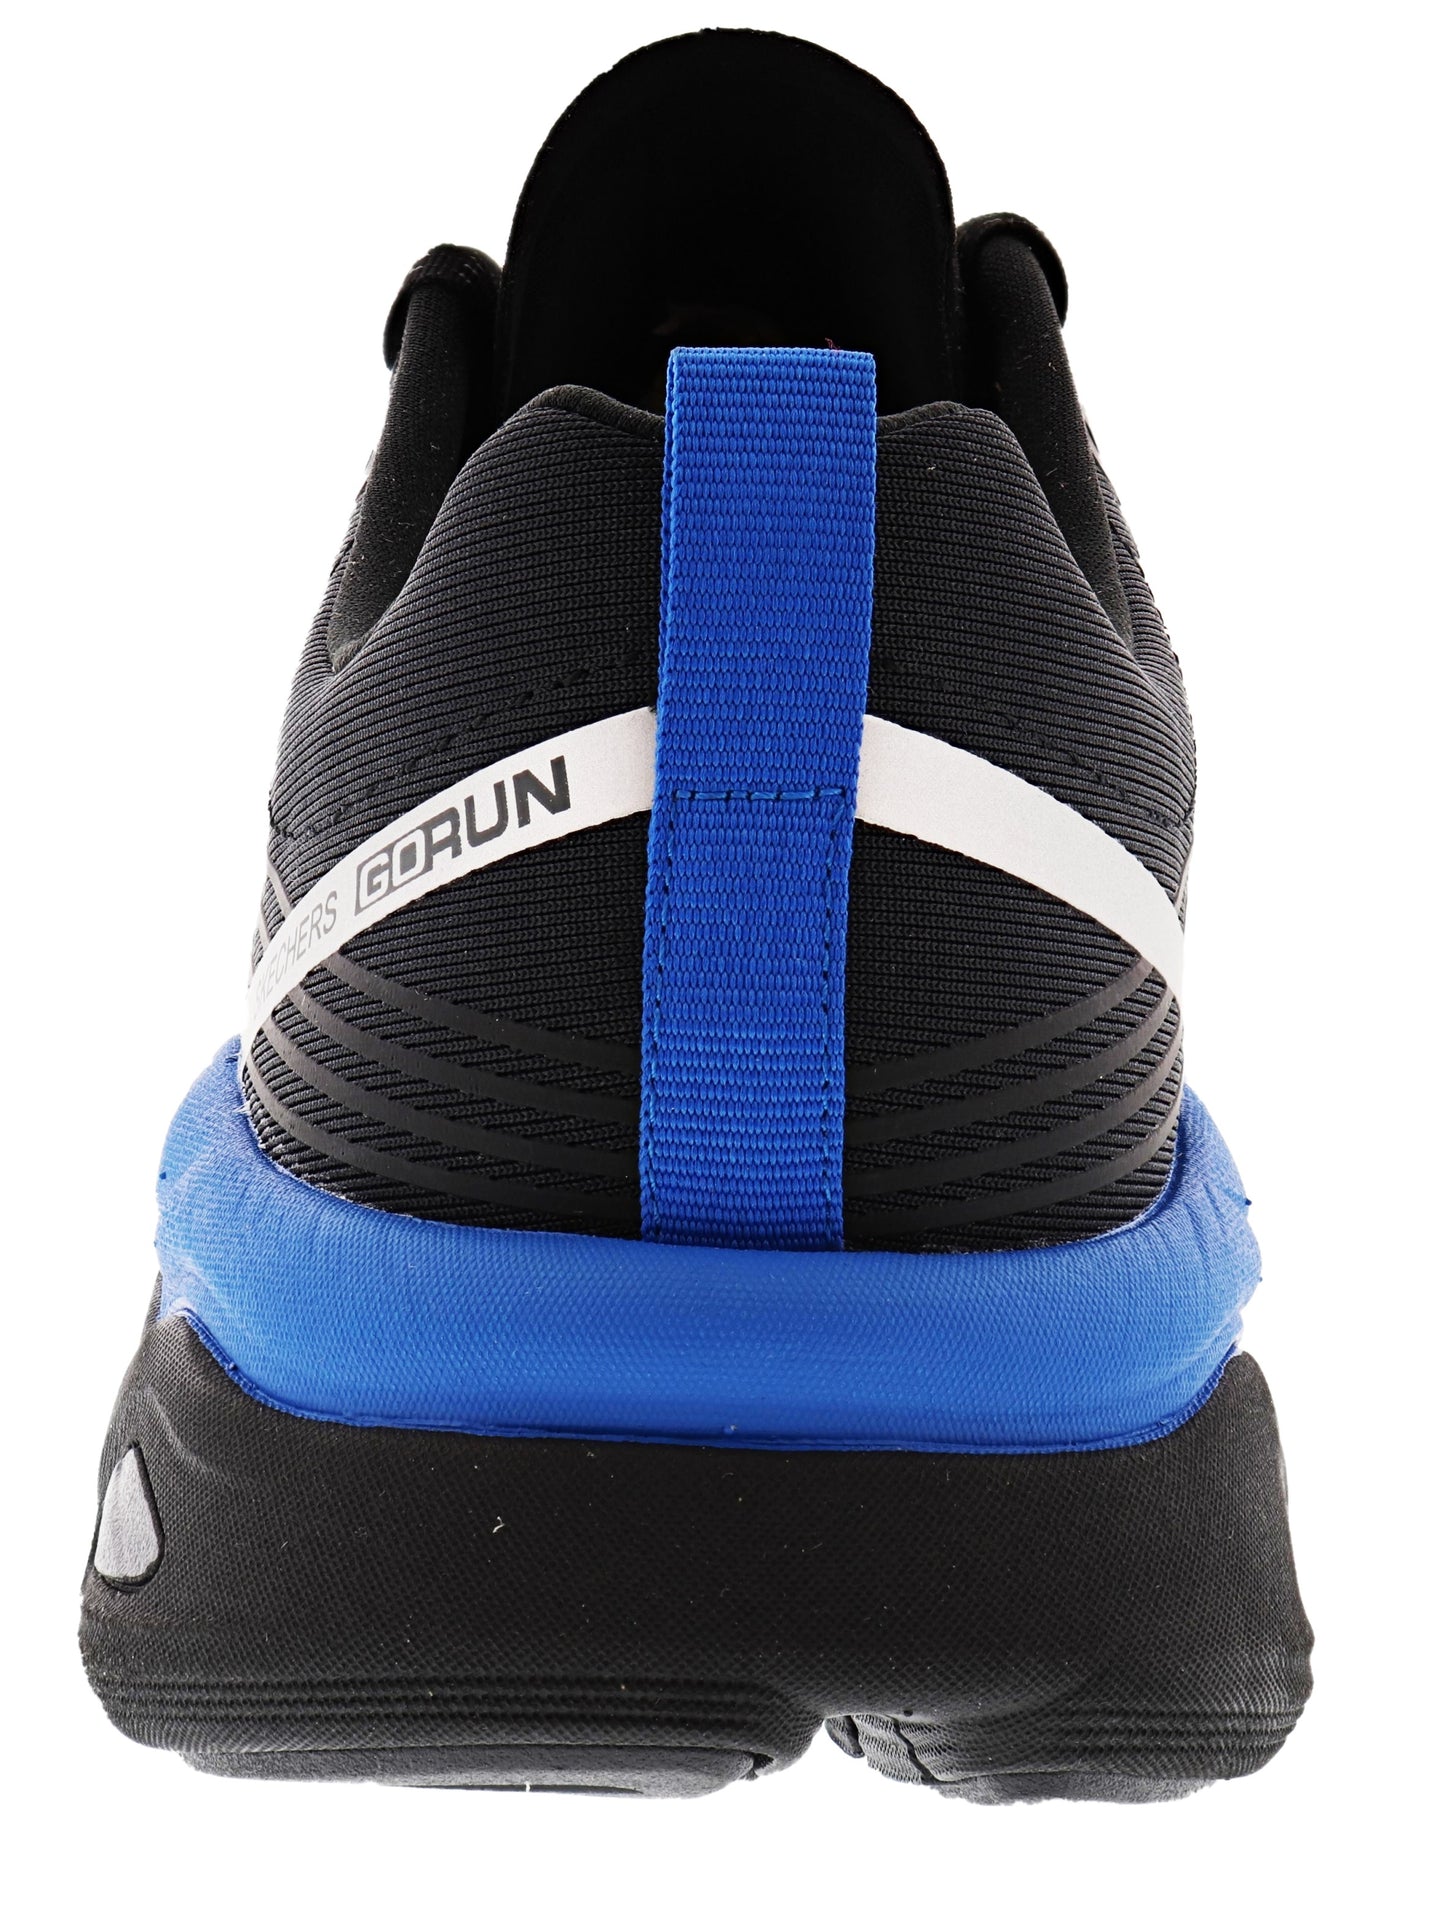 
                  
                    Skechers Men Lightweight Running Shoes Max Cushion Ultimate 4E
                  
                